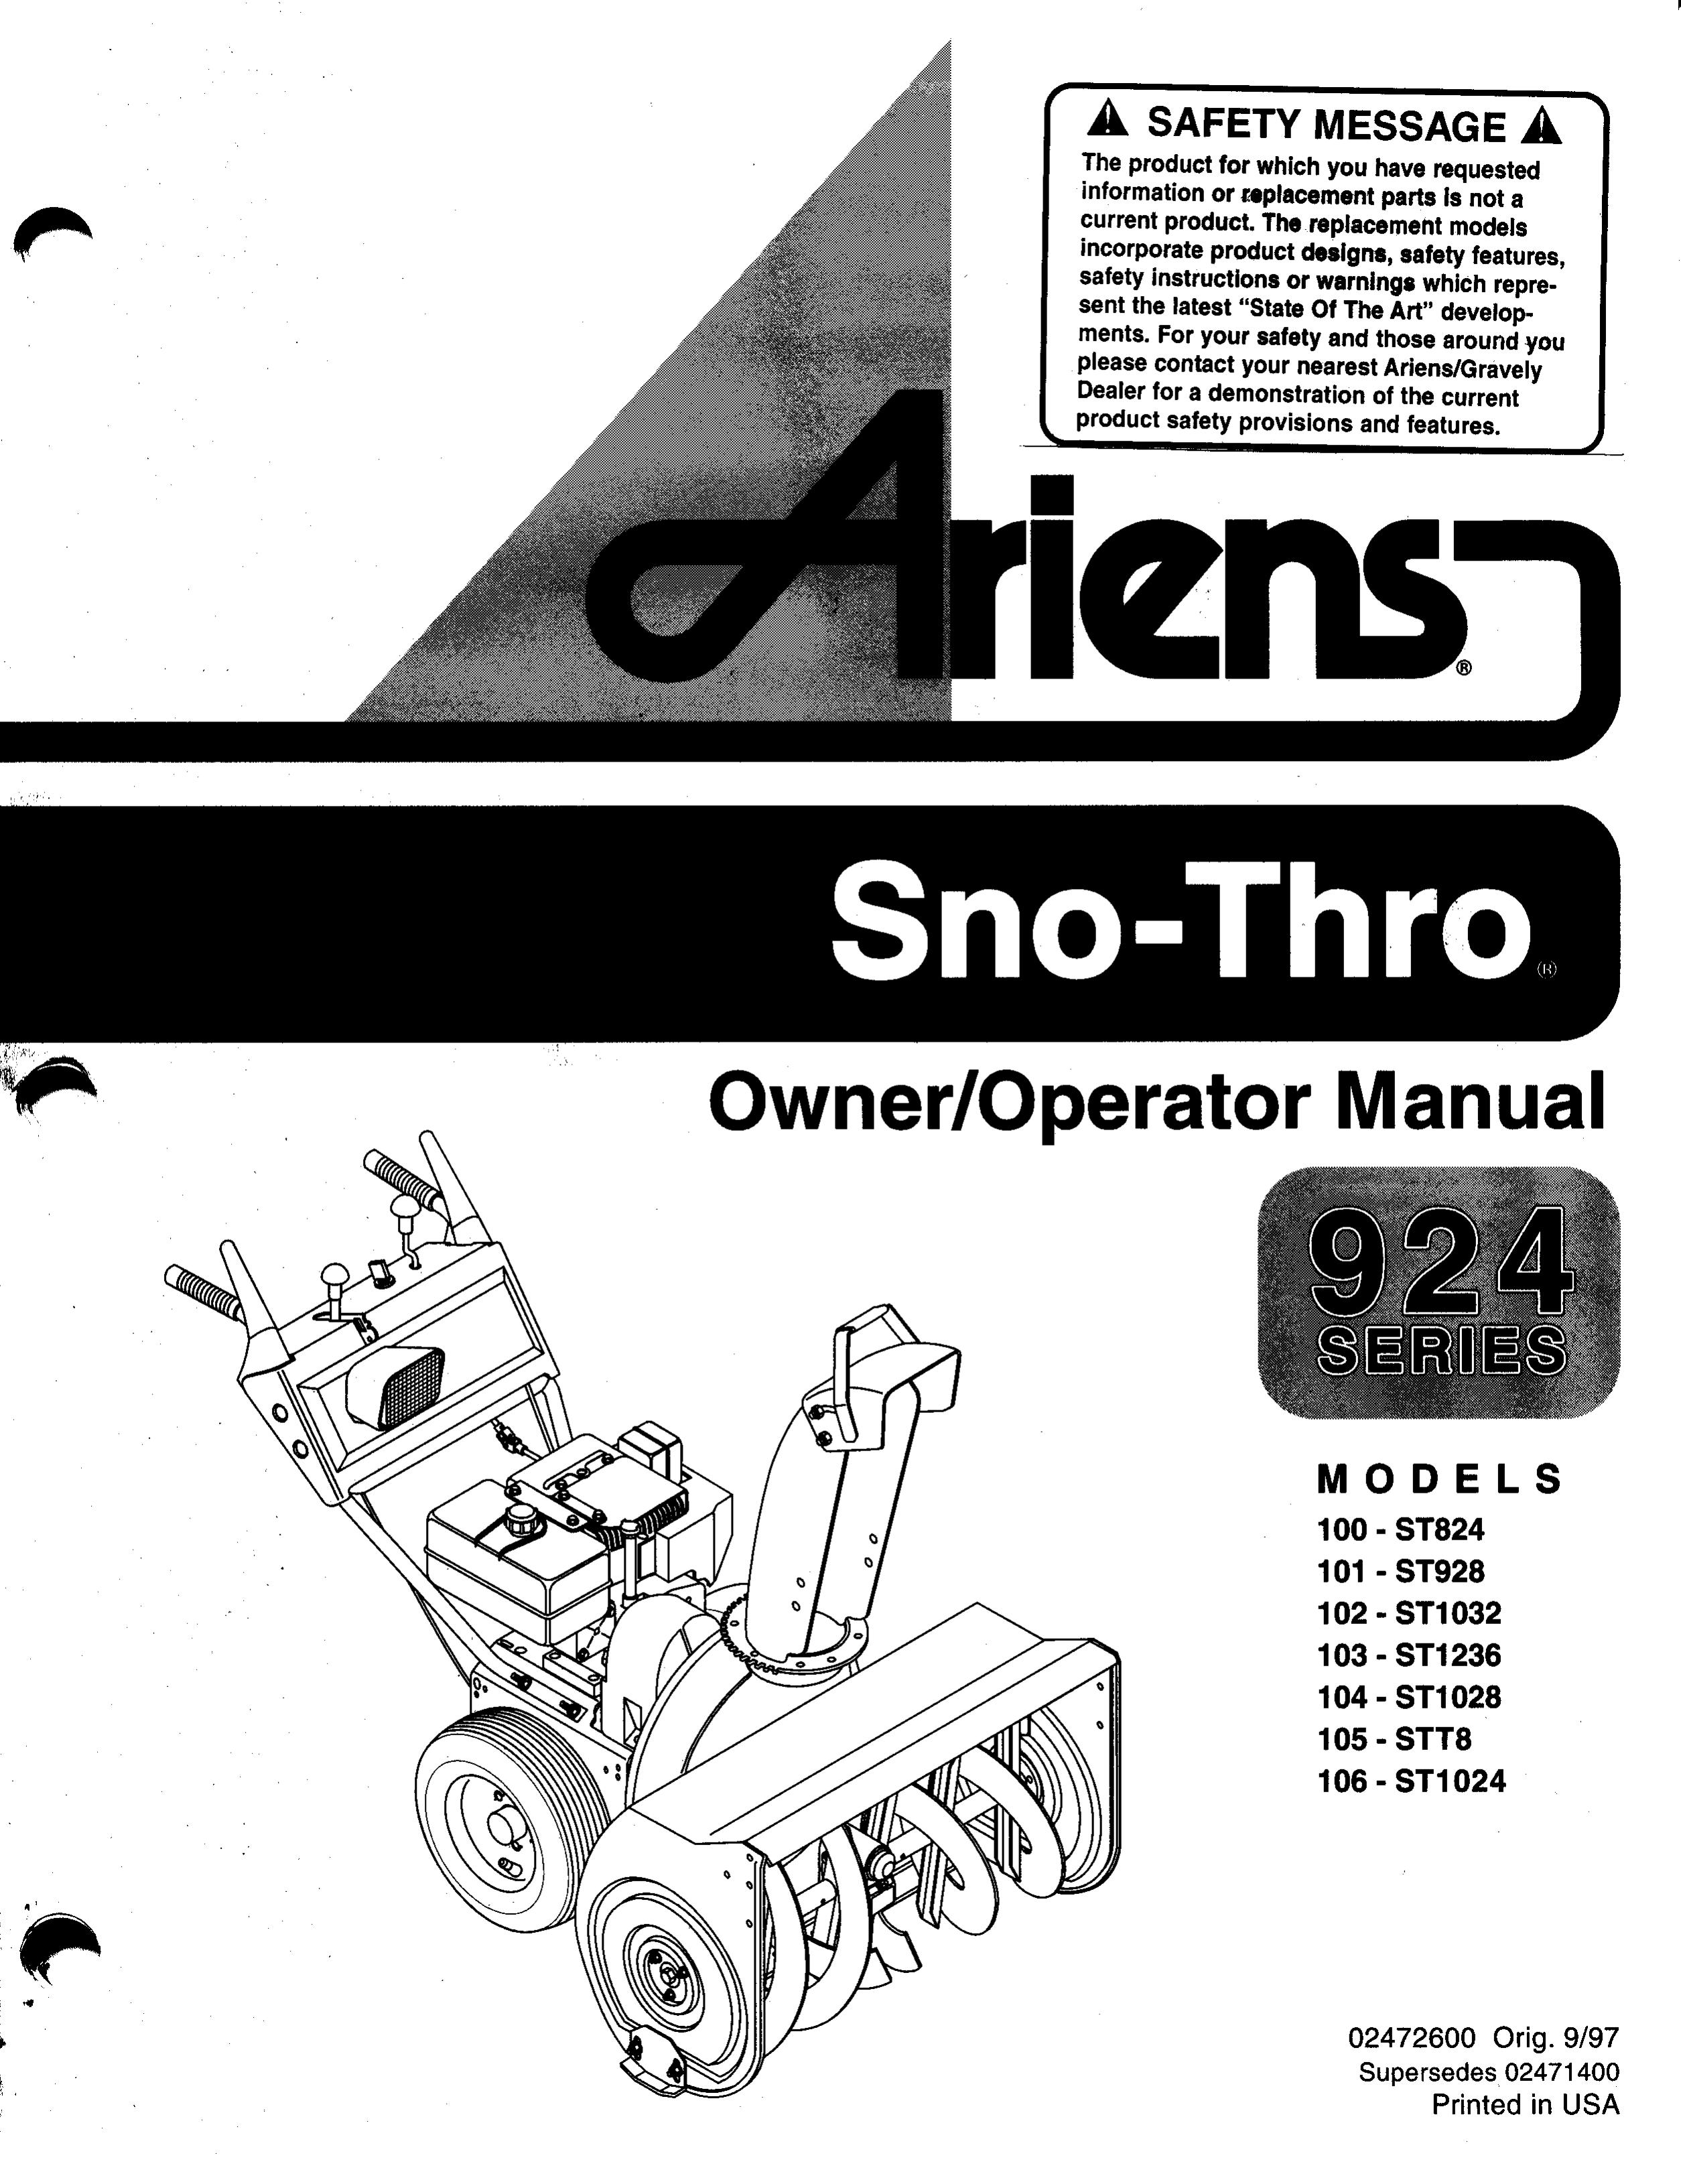 Ariens 105-STT8 Snow Blower User Manual